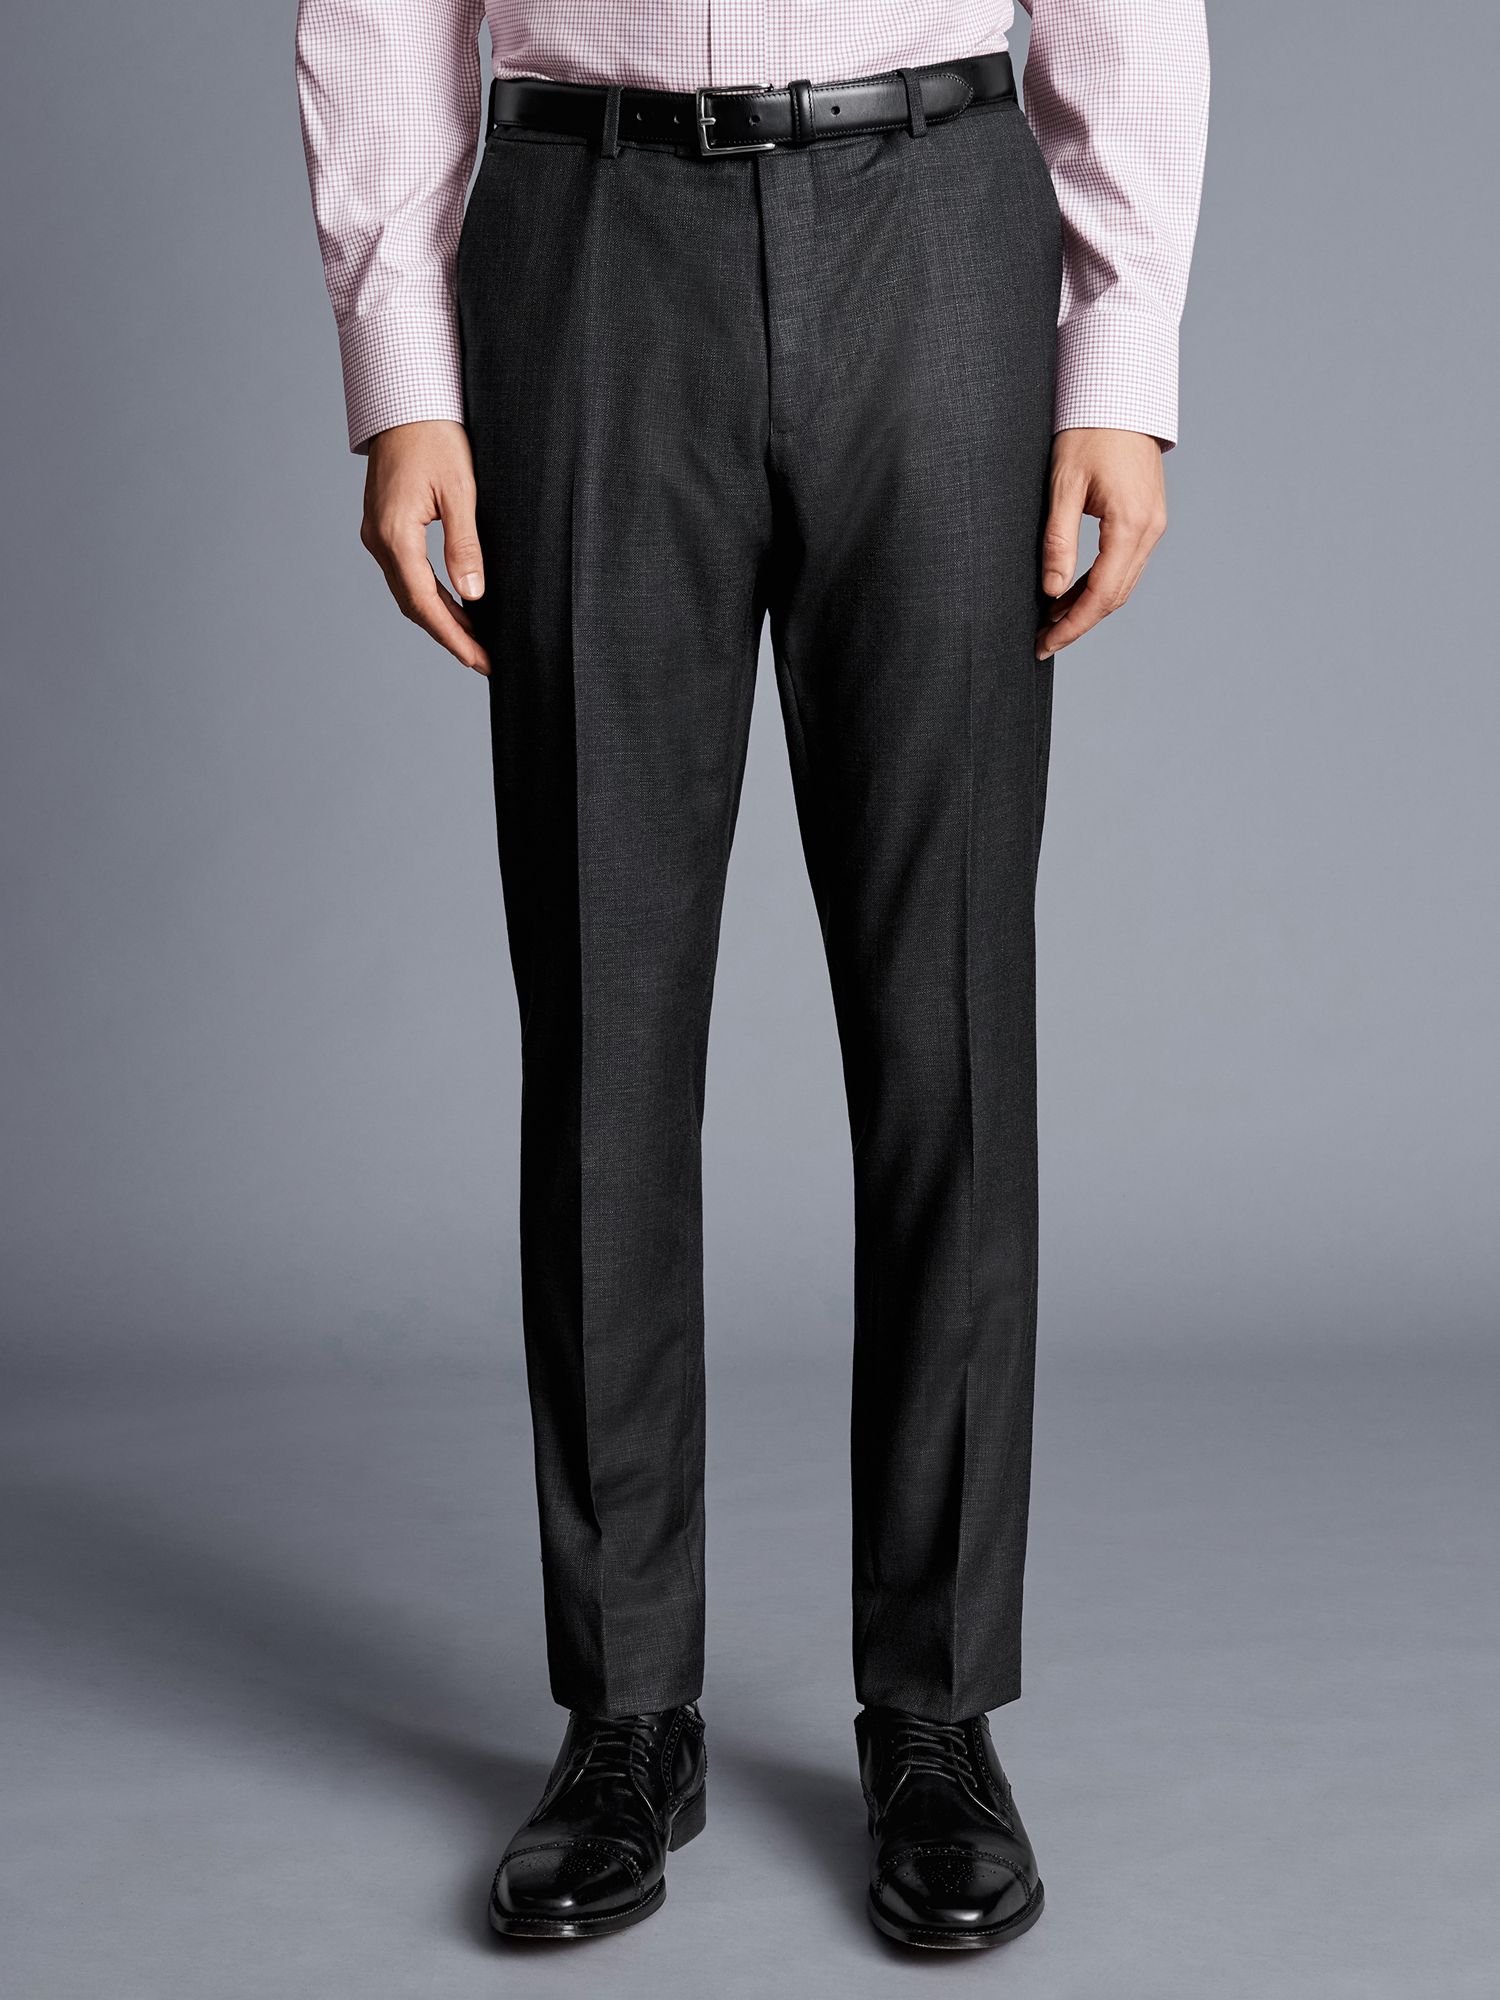 Charles Tyrwhitt Slim Fit Italian Luxury Trousers, Charcoal Grey